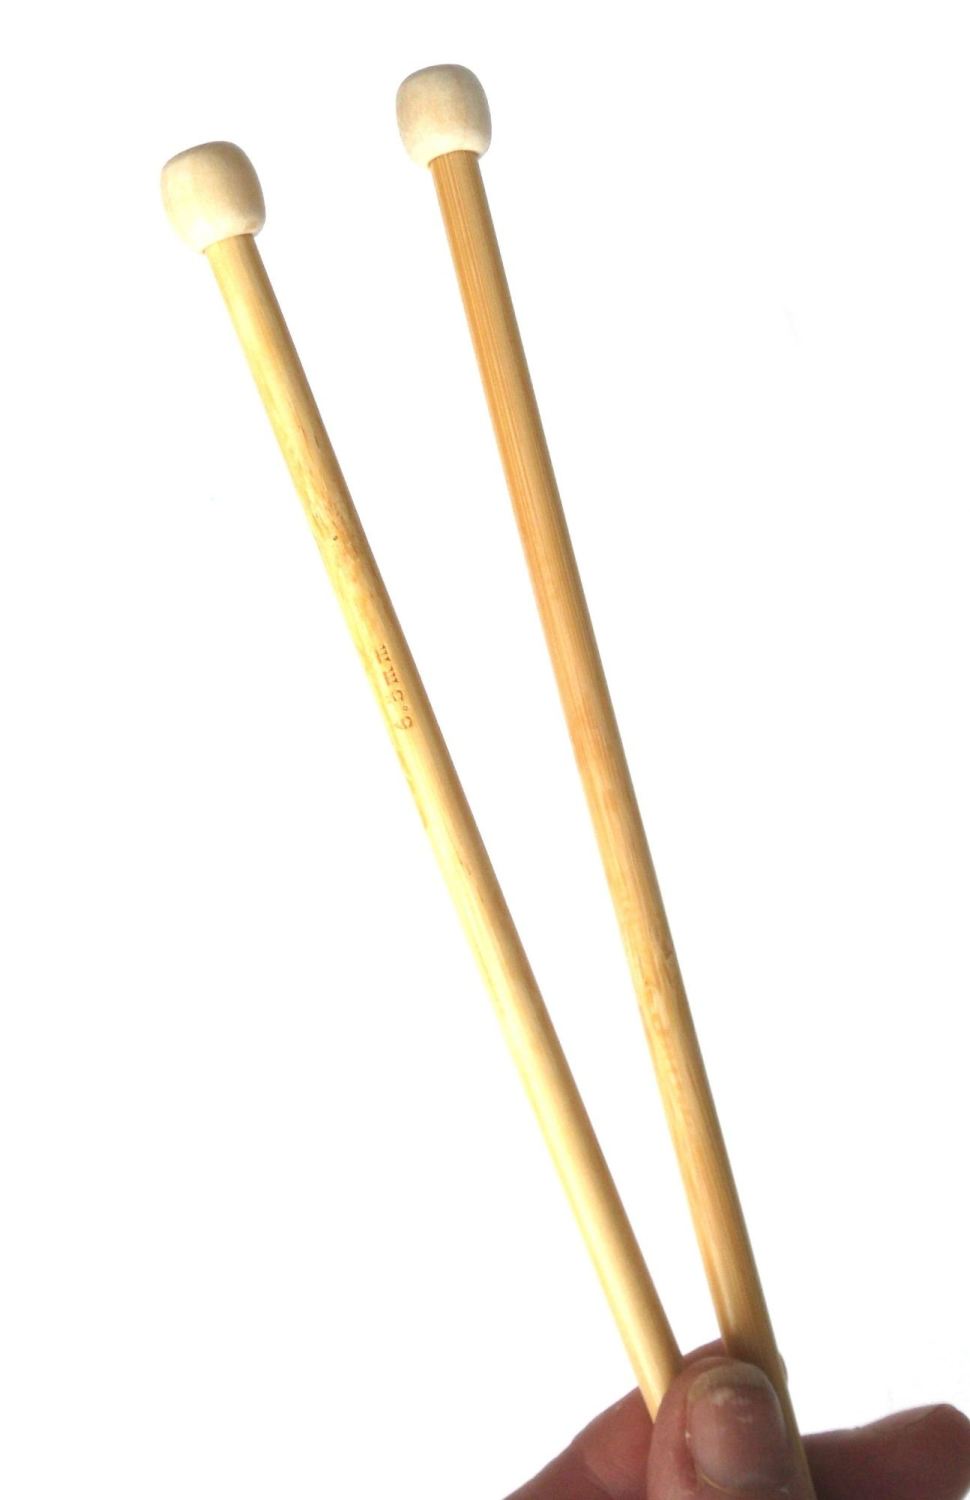 6 -7.5mm bamboo knitting needles 35 cm long 